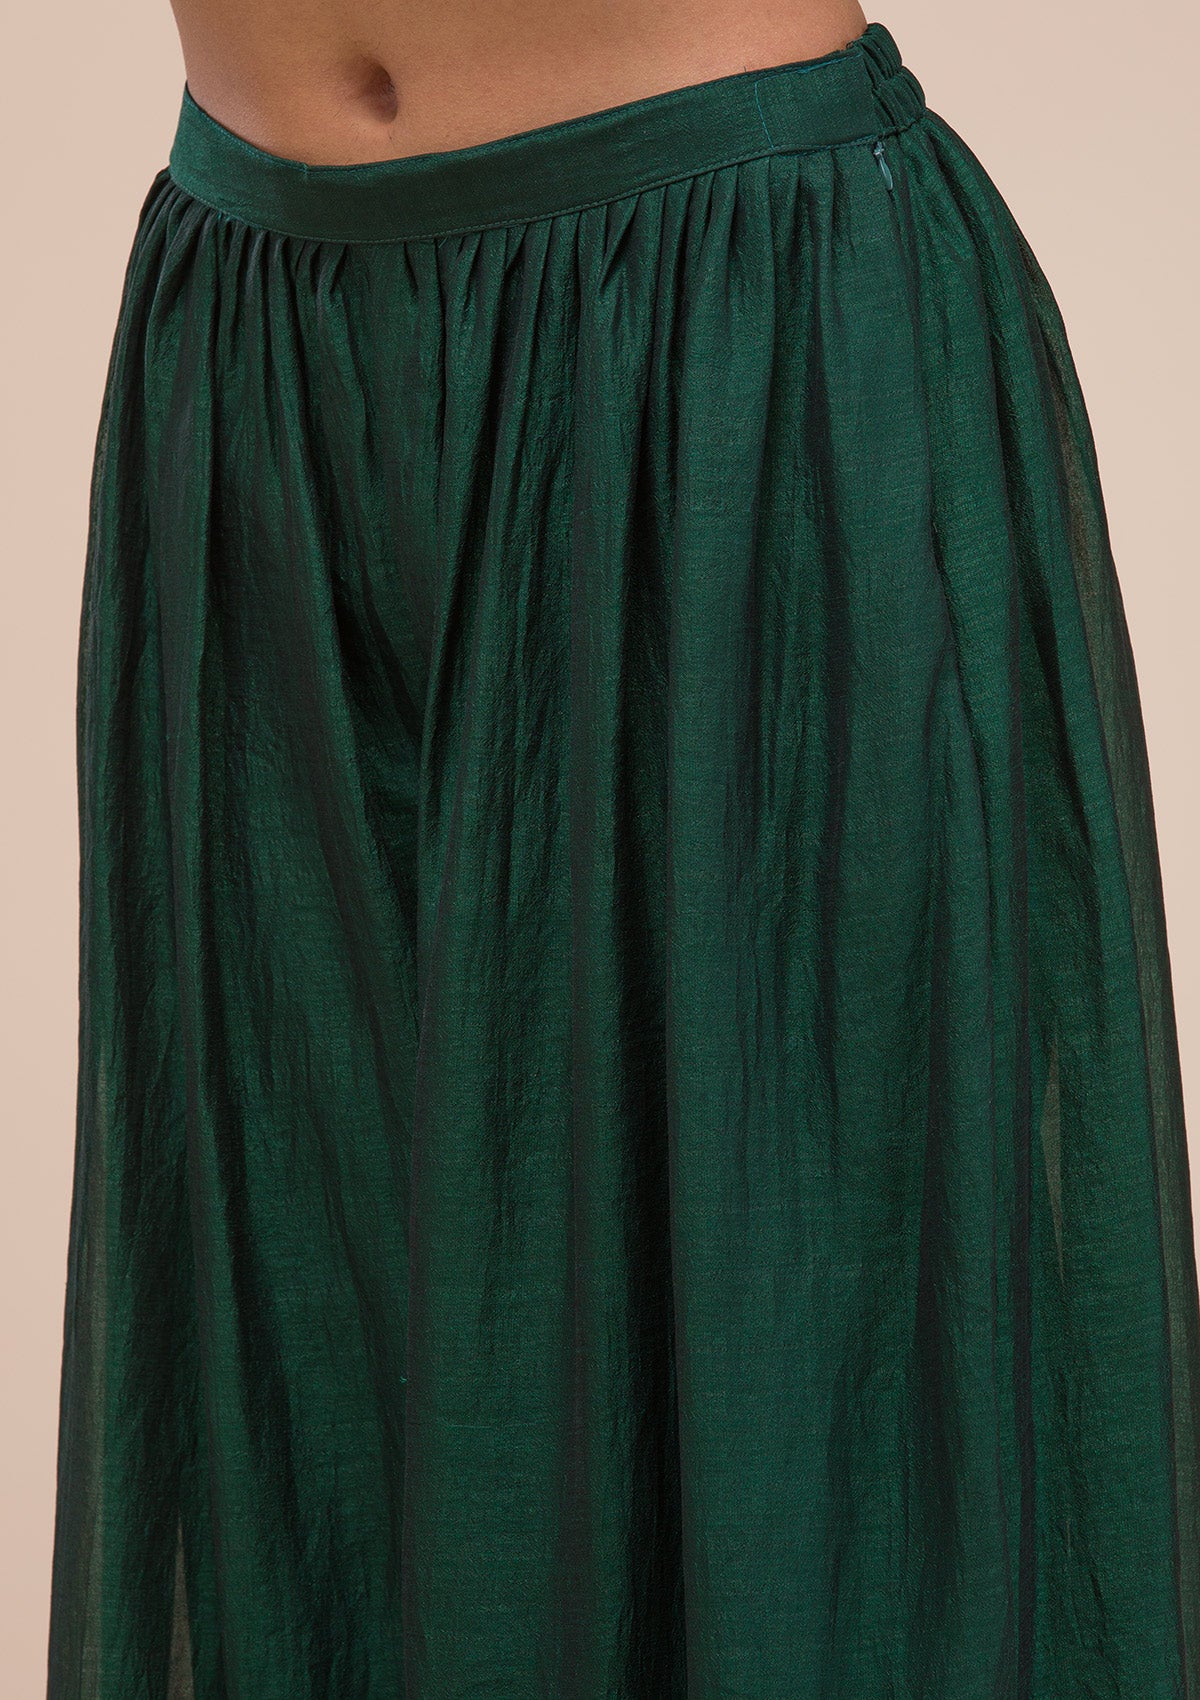 Bottle Green Zariwork Raw Silk Readymade Salwar Suit